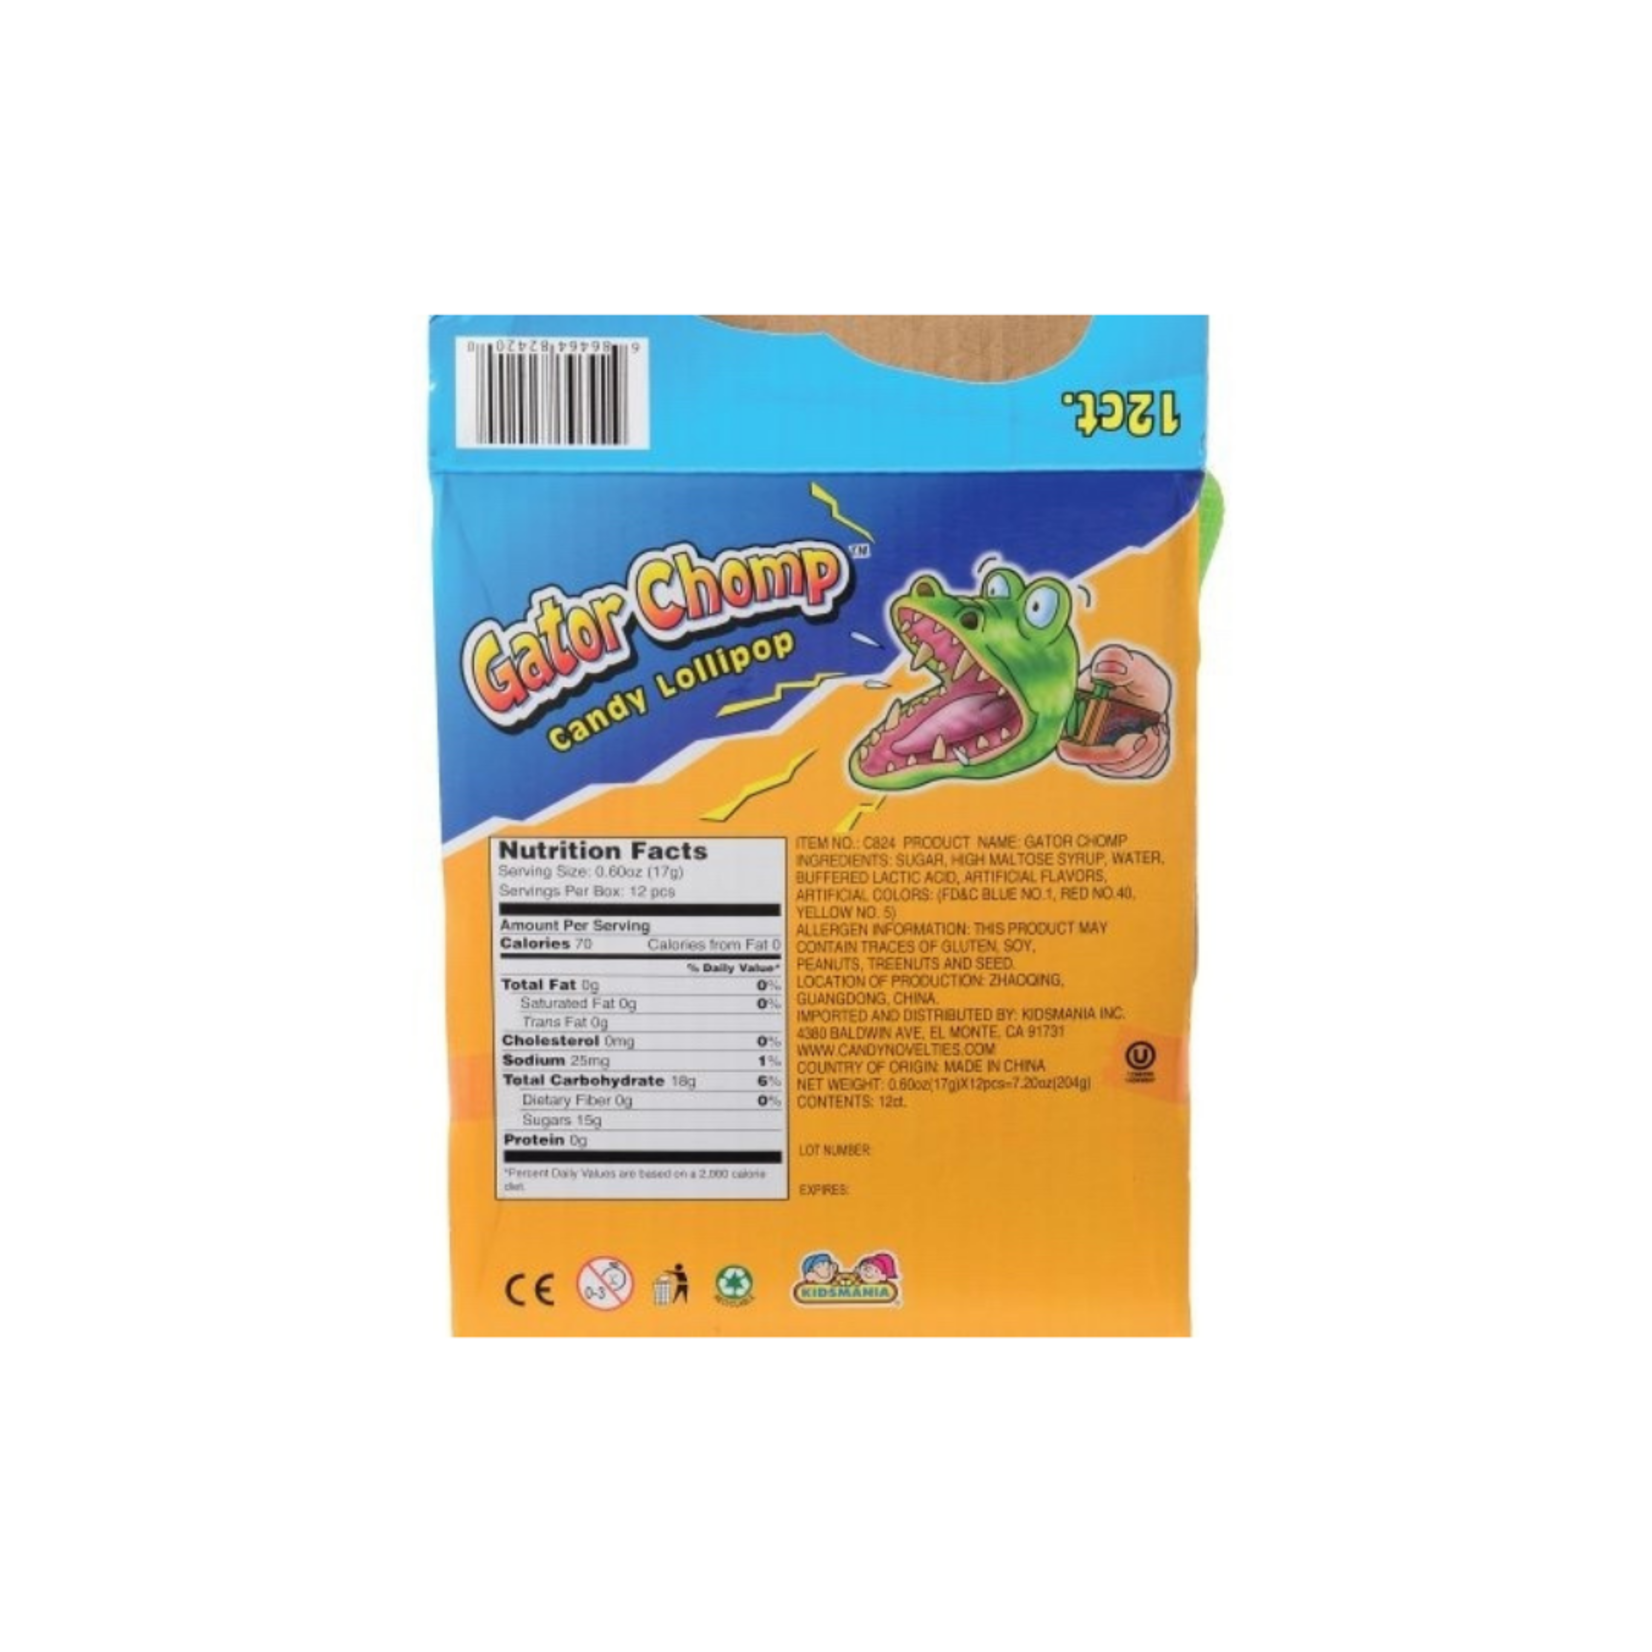 Gator Chomp Candy Lollipops 12ct